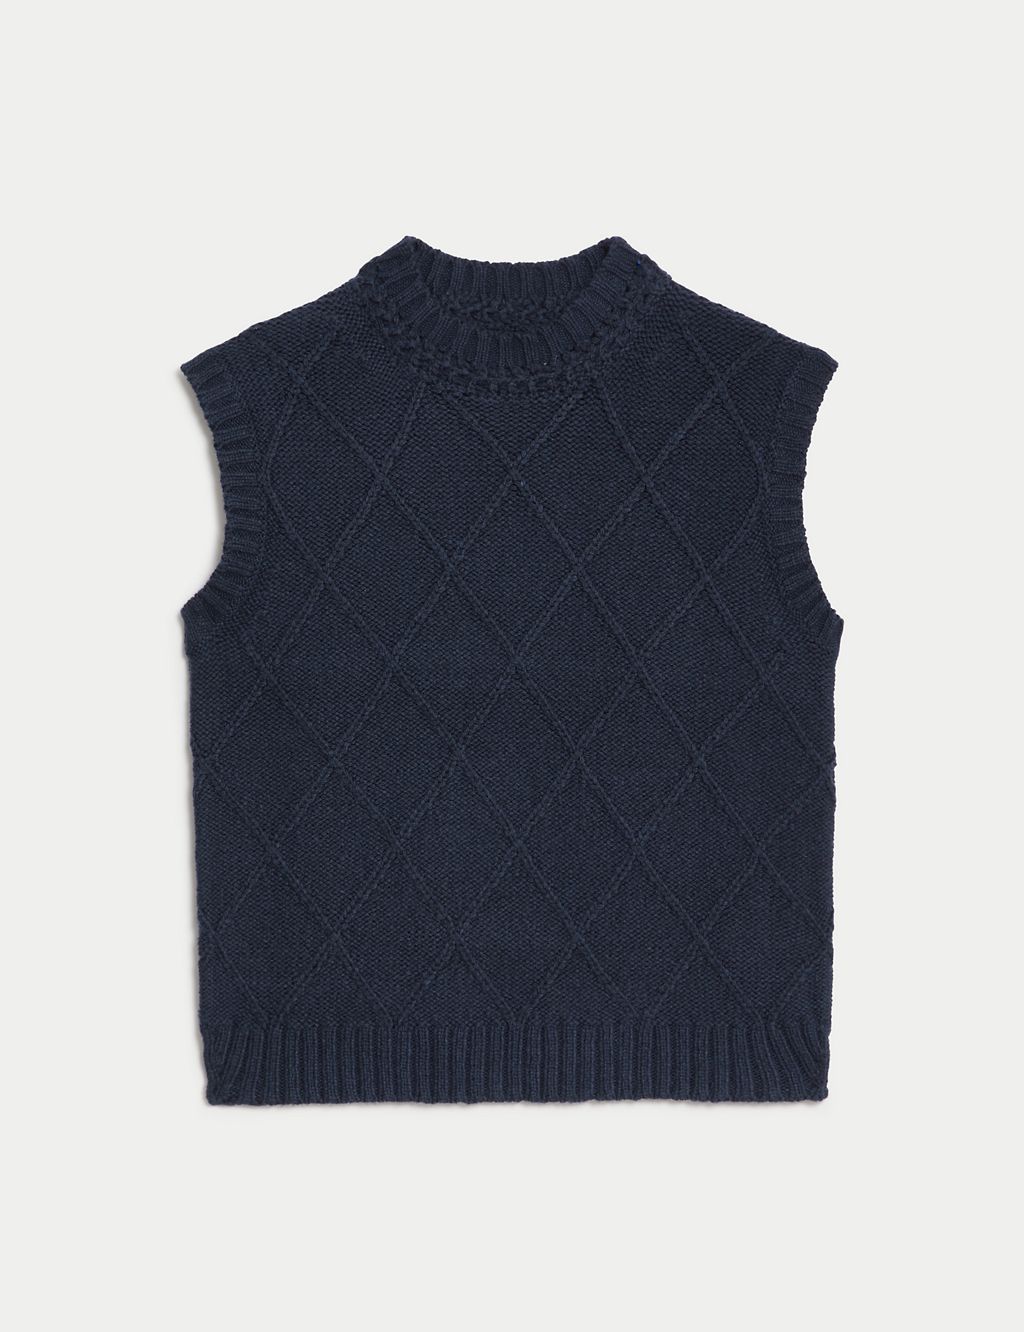 Diamond Stitch Knitted Vest with Wool | Per Una | M&S